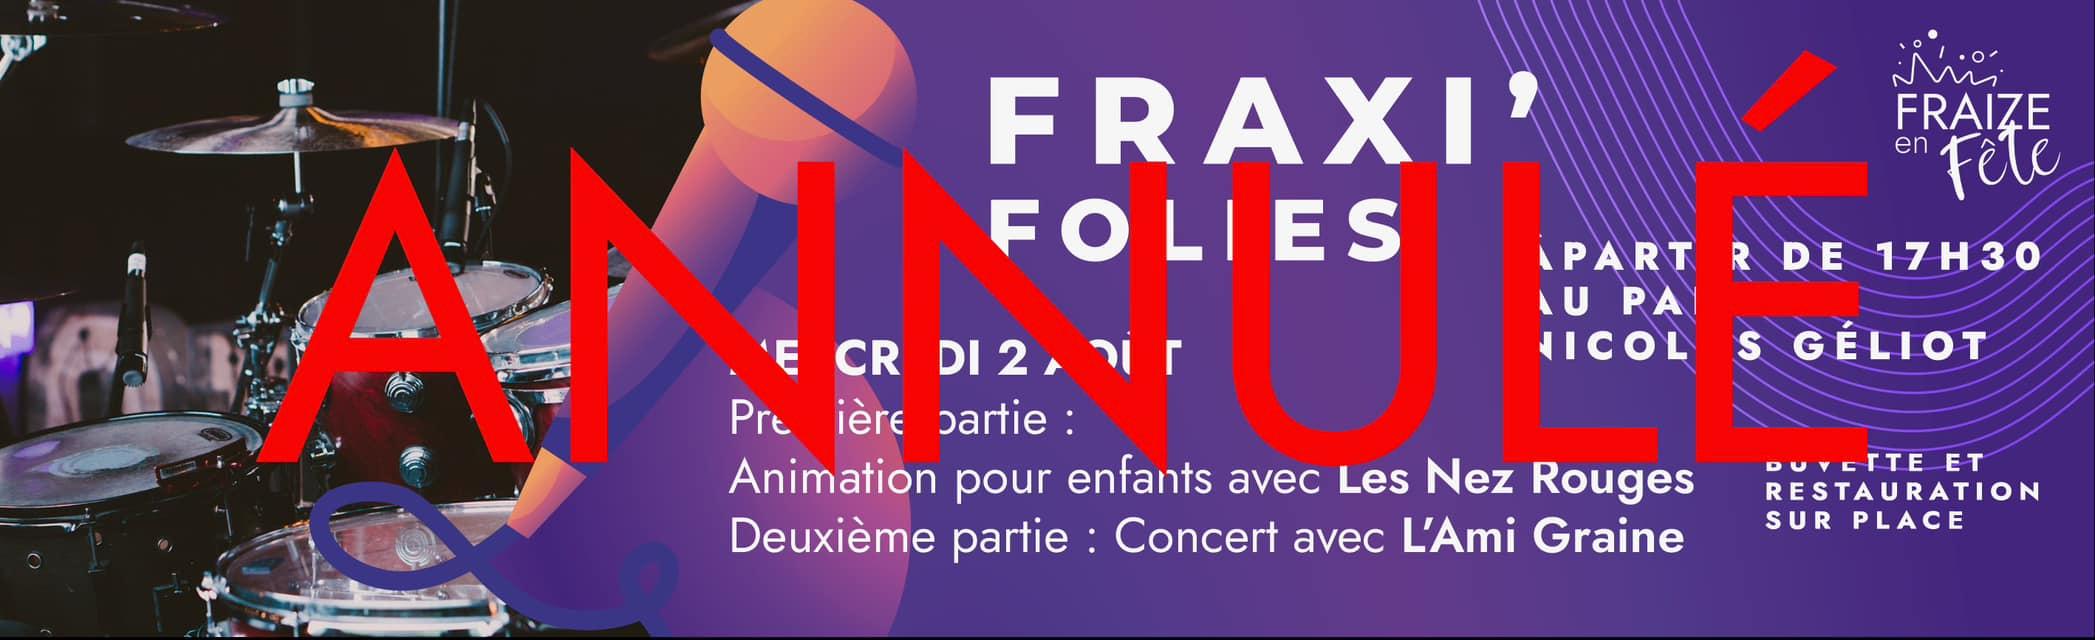 Fraize-Annulation_Fraxi'Folies